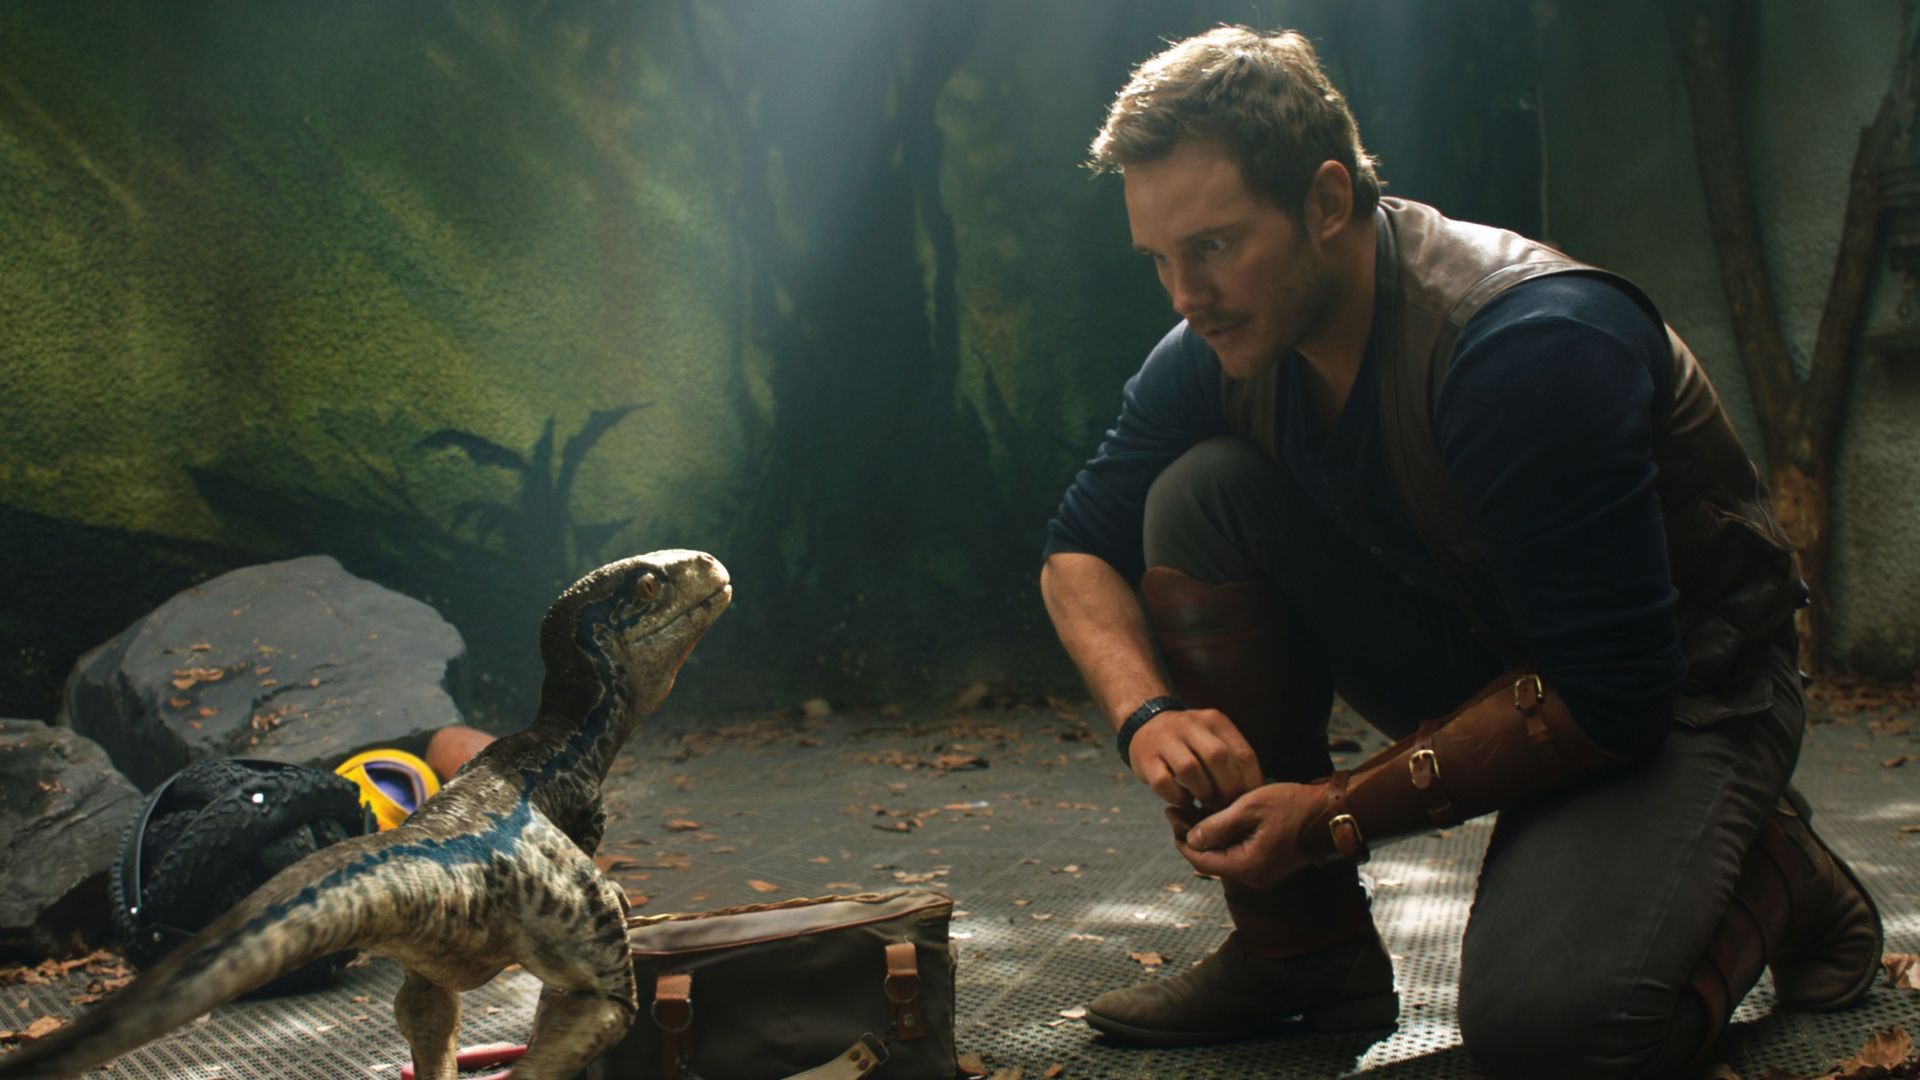 Desktop Wallpaper Chris Pratt Little Raptor Jurassic World Fallen Kingdom 2018 Movie 5k Hd Image Picture Background Aff40d